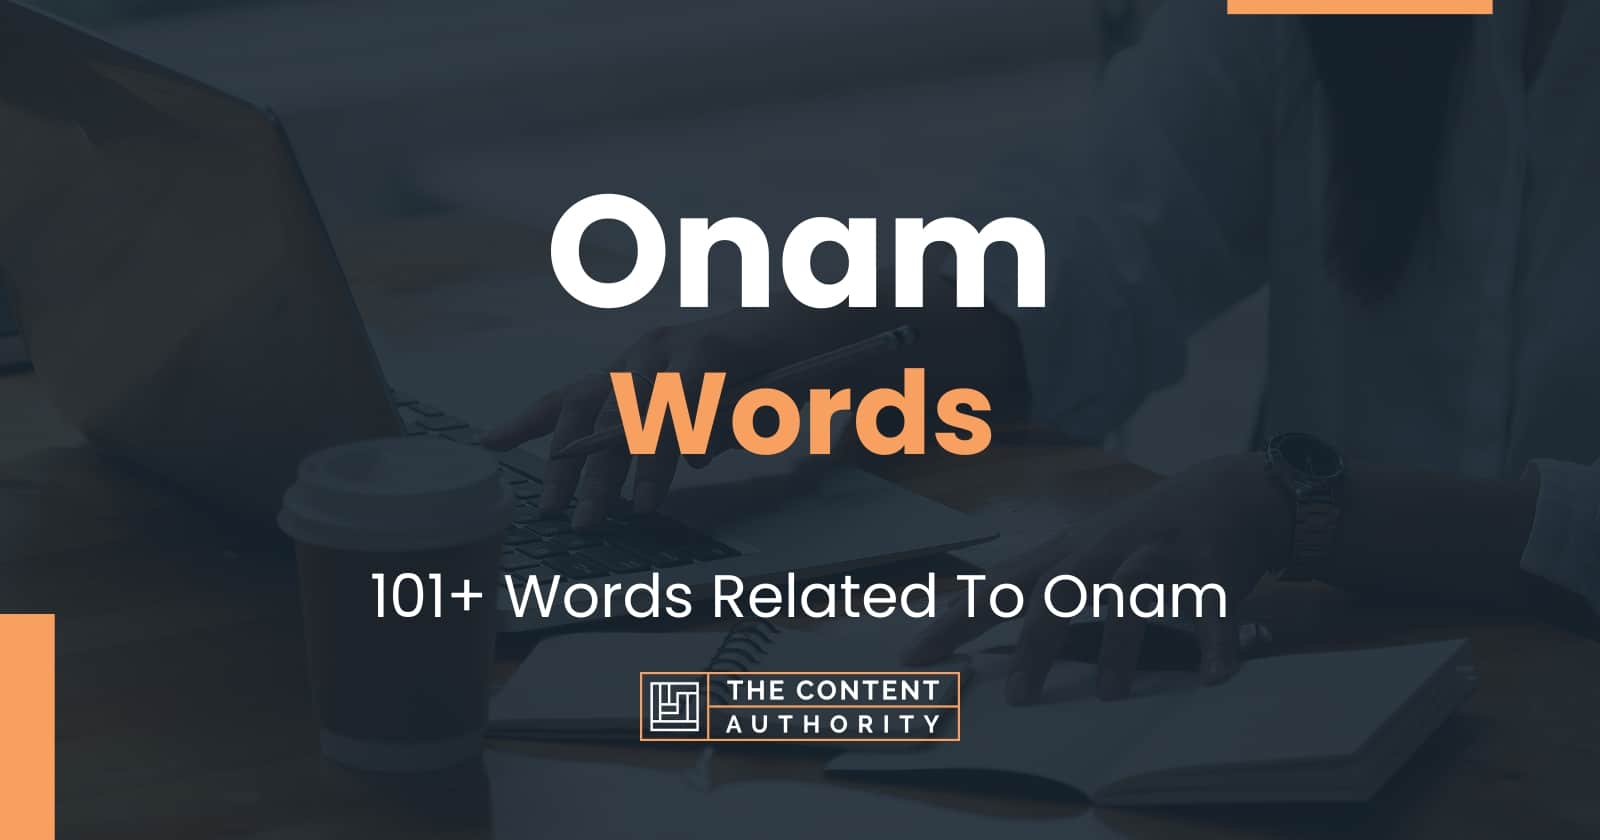 Onam Words - 101+ Words Related To Onam